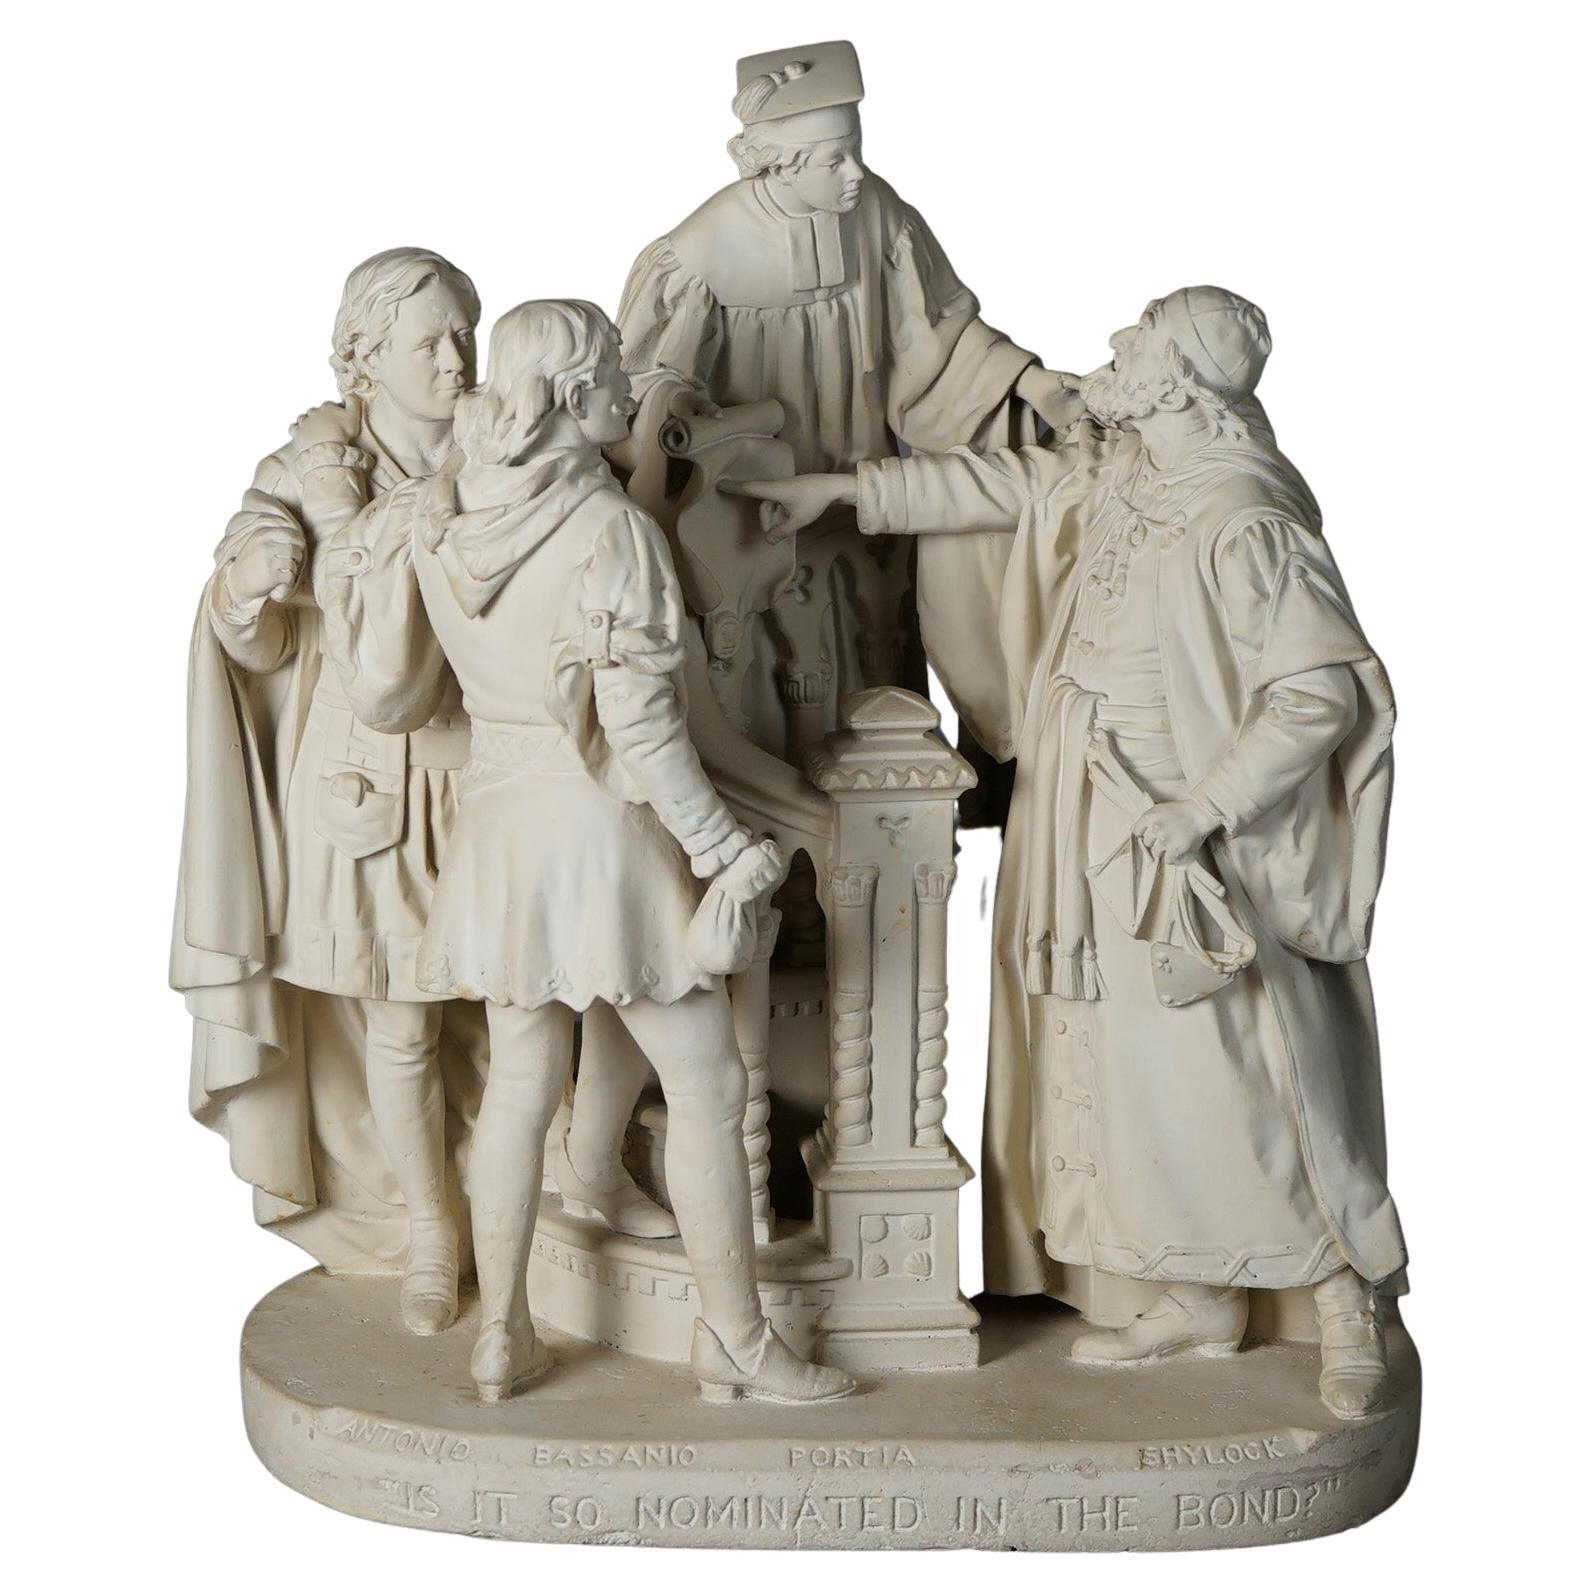 Antique John Rogers Sculptural Group "Antonio Bassanio", 19th Century For Sale